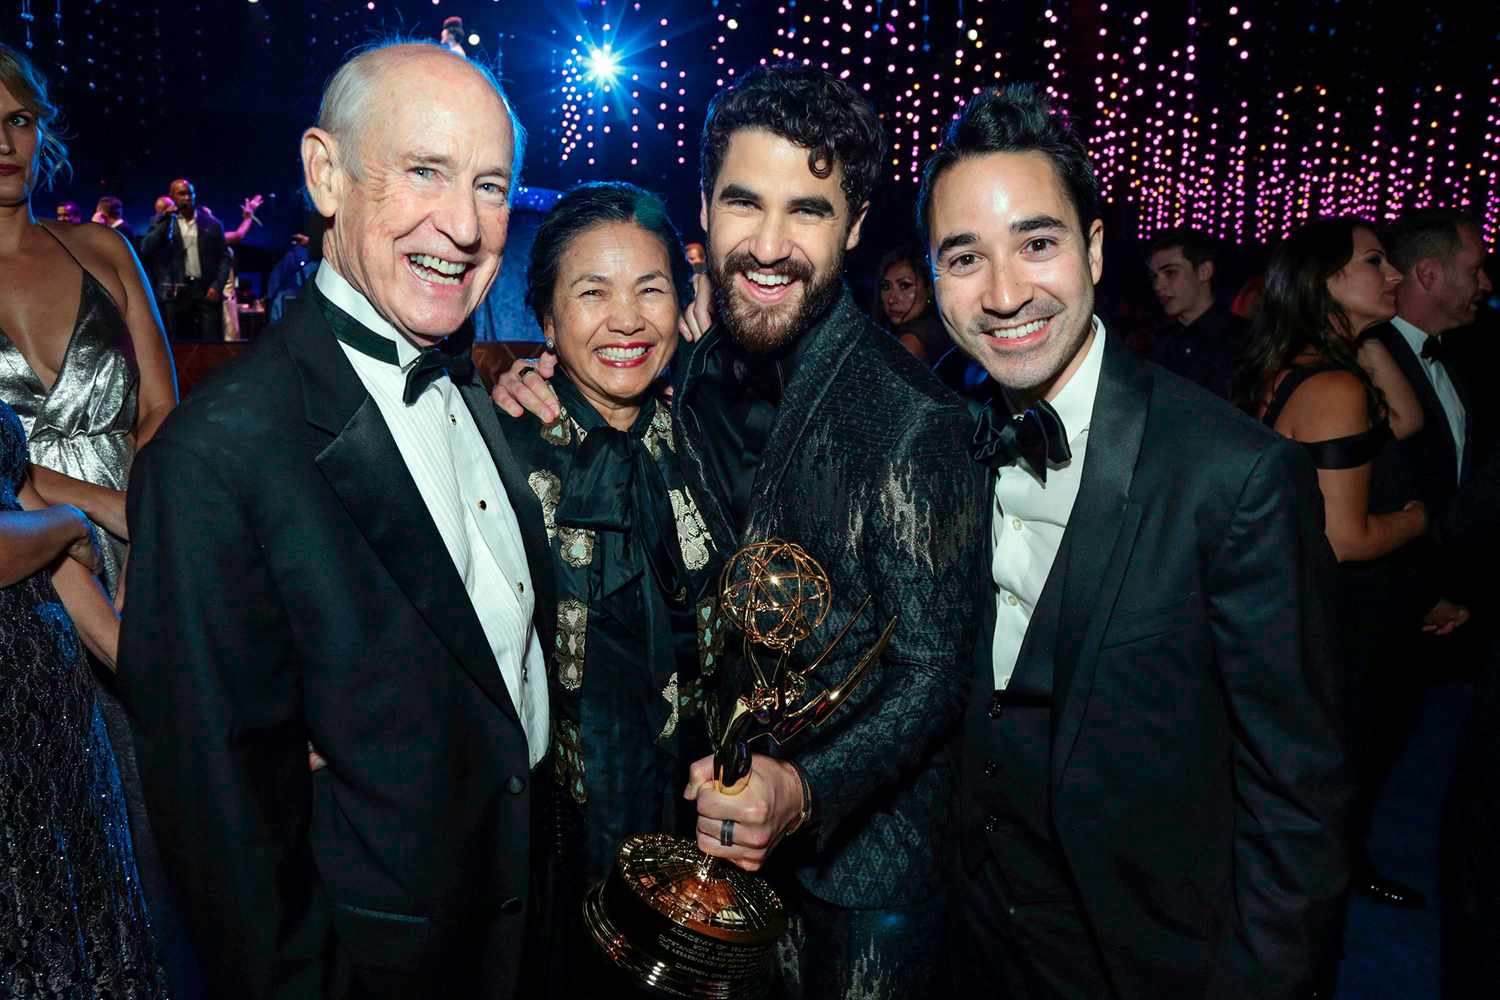 Darren with both of his parents